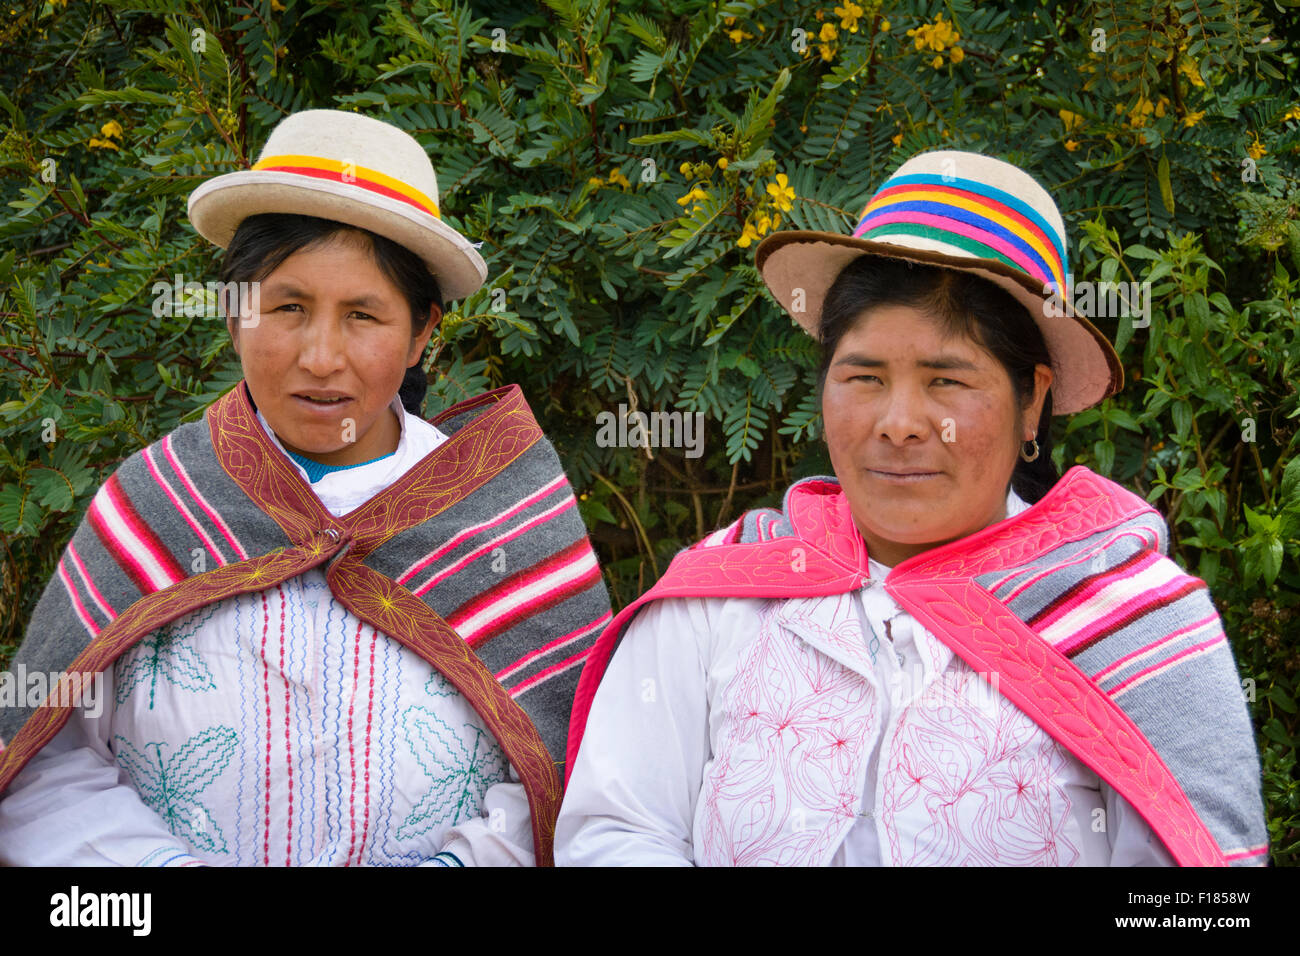 quechua clothing